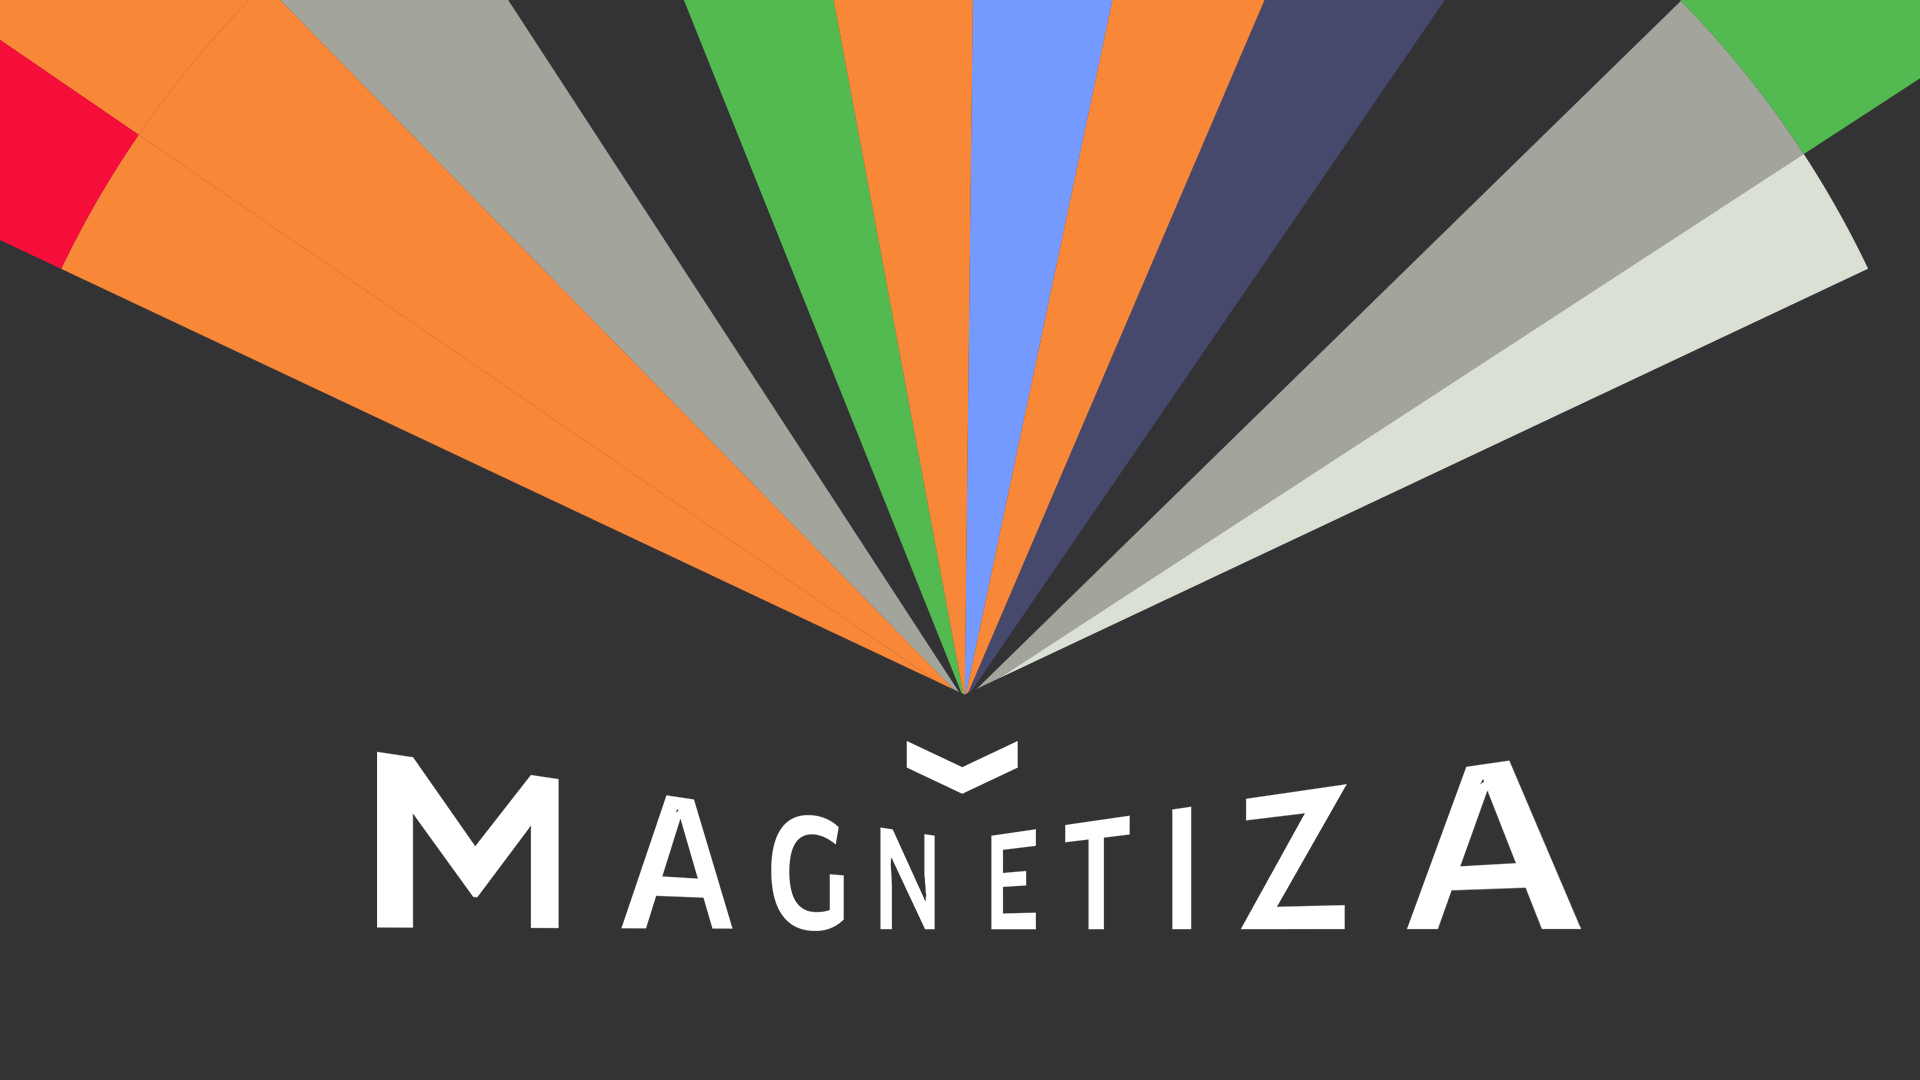 Magnetiza